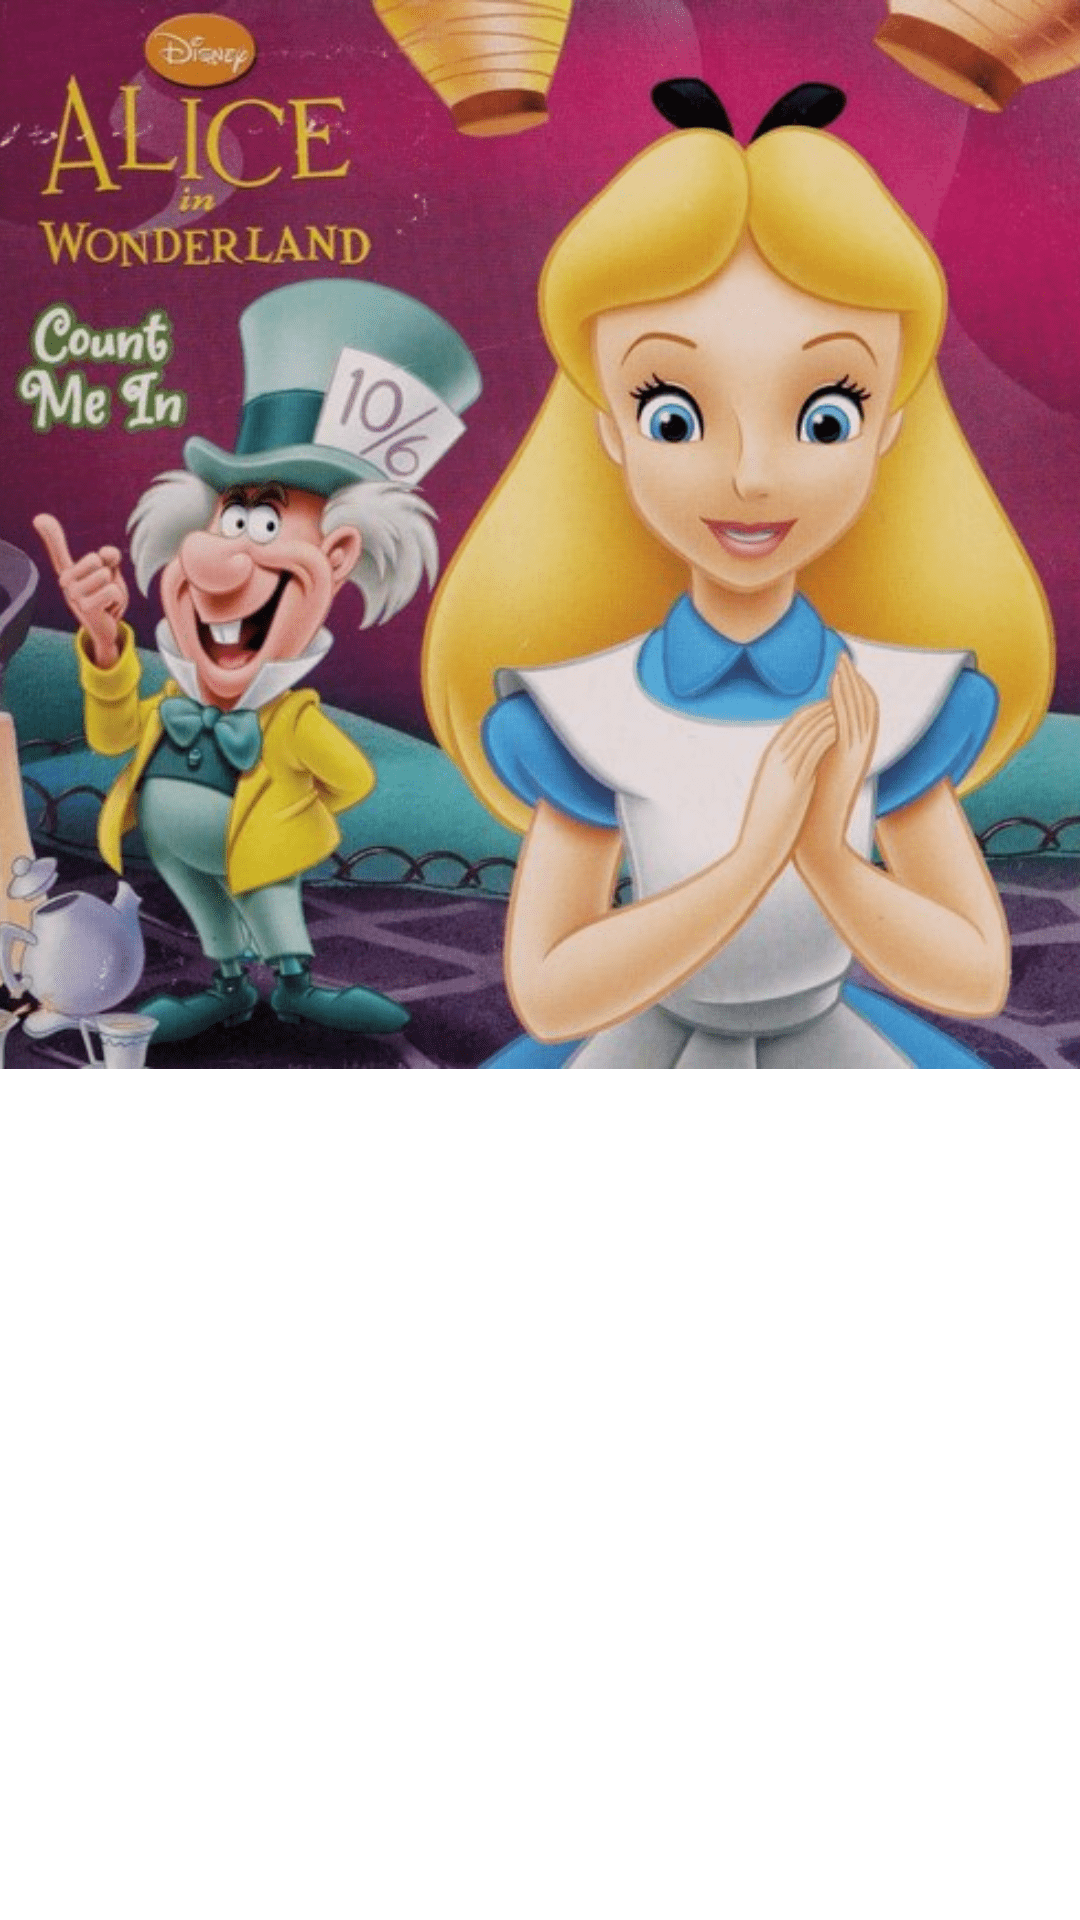 Disney Alice in Wonderland: Count Me in